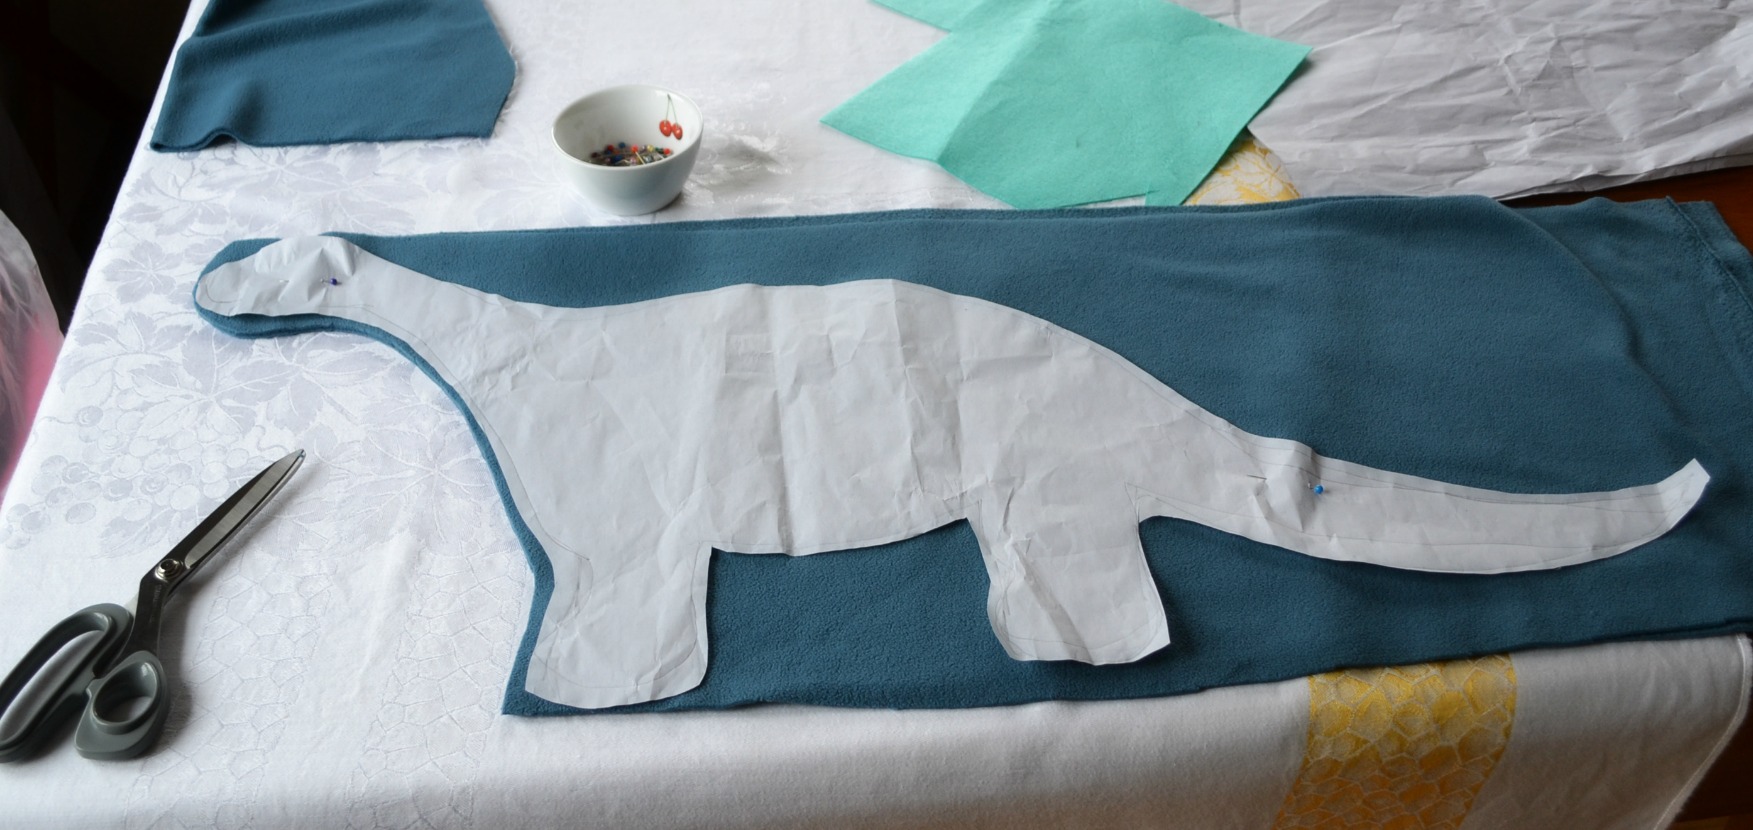 dinosaur sewing pattern